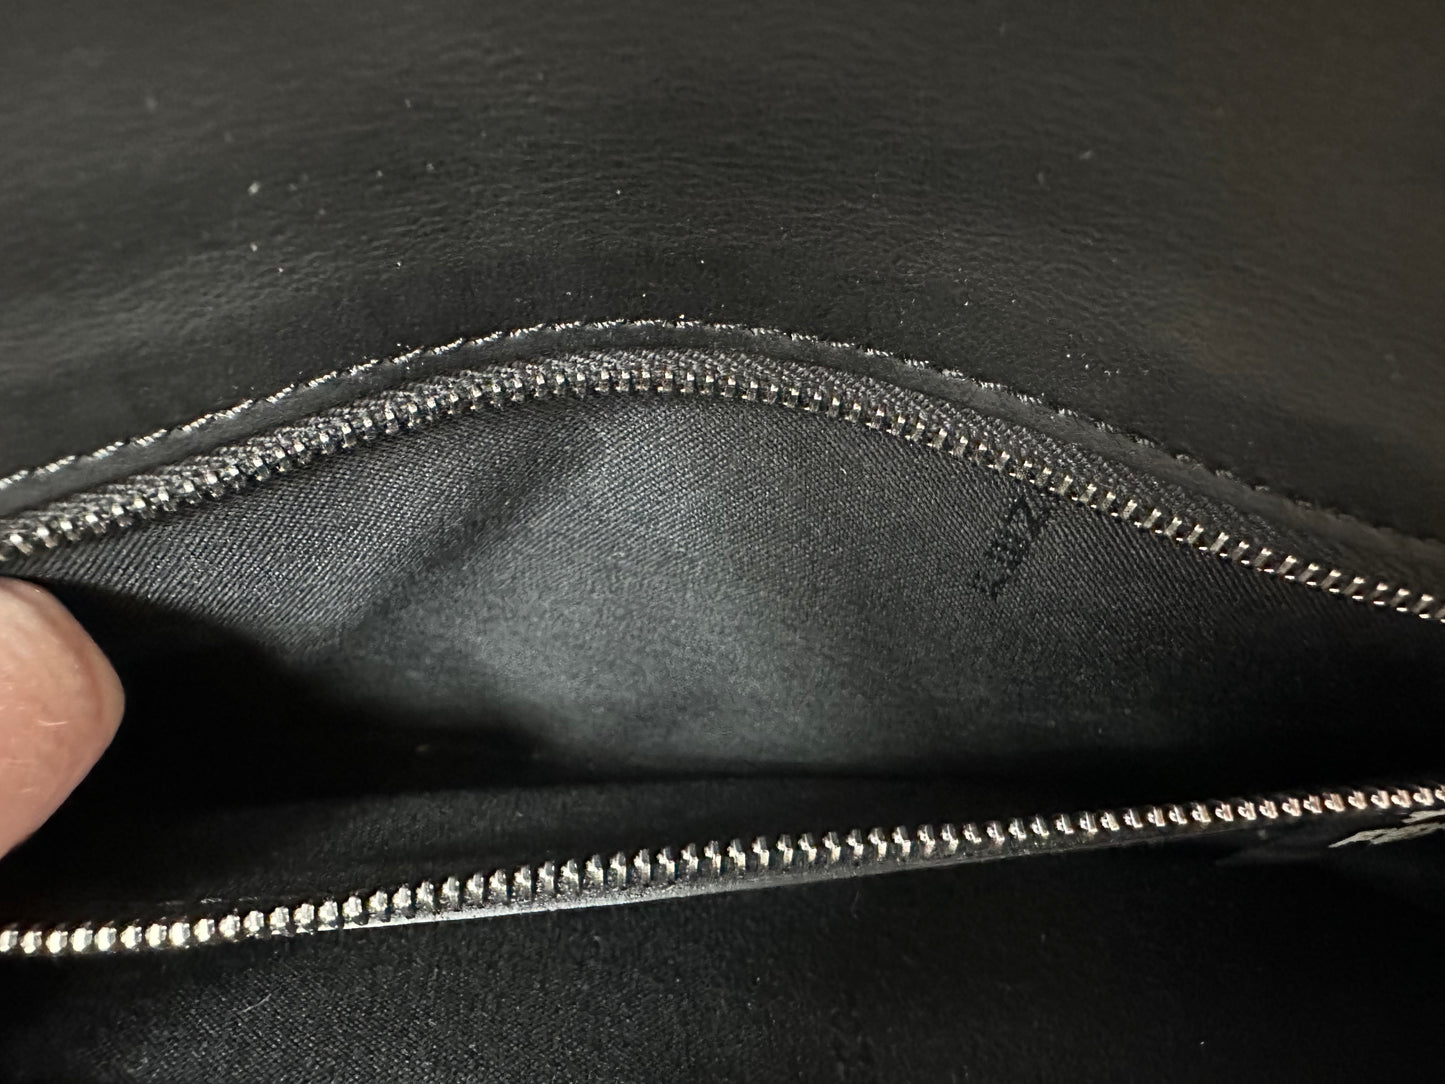 Inside of zip pocket